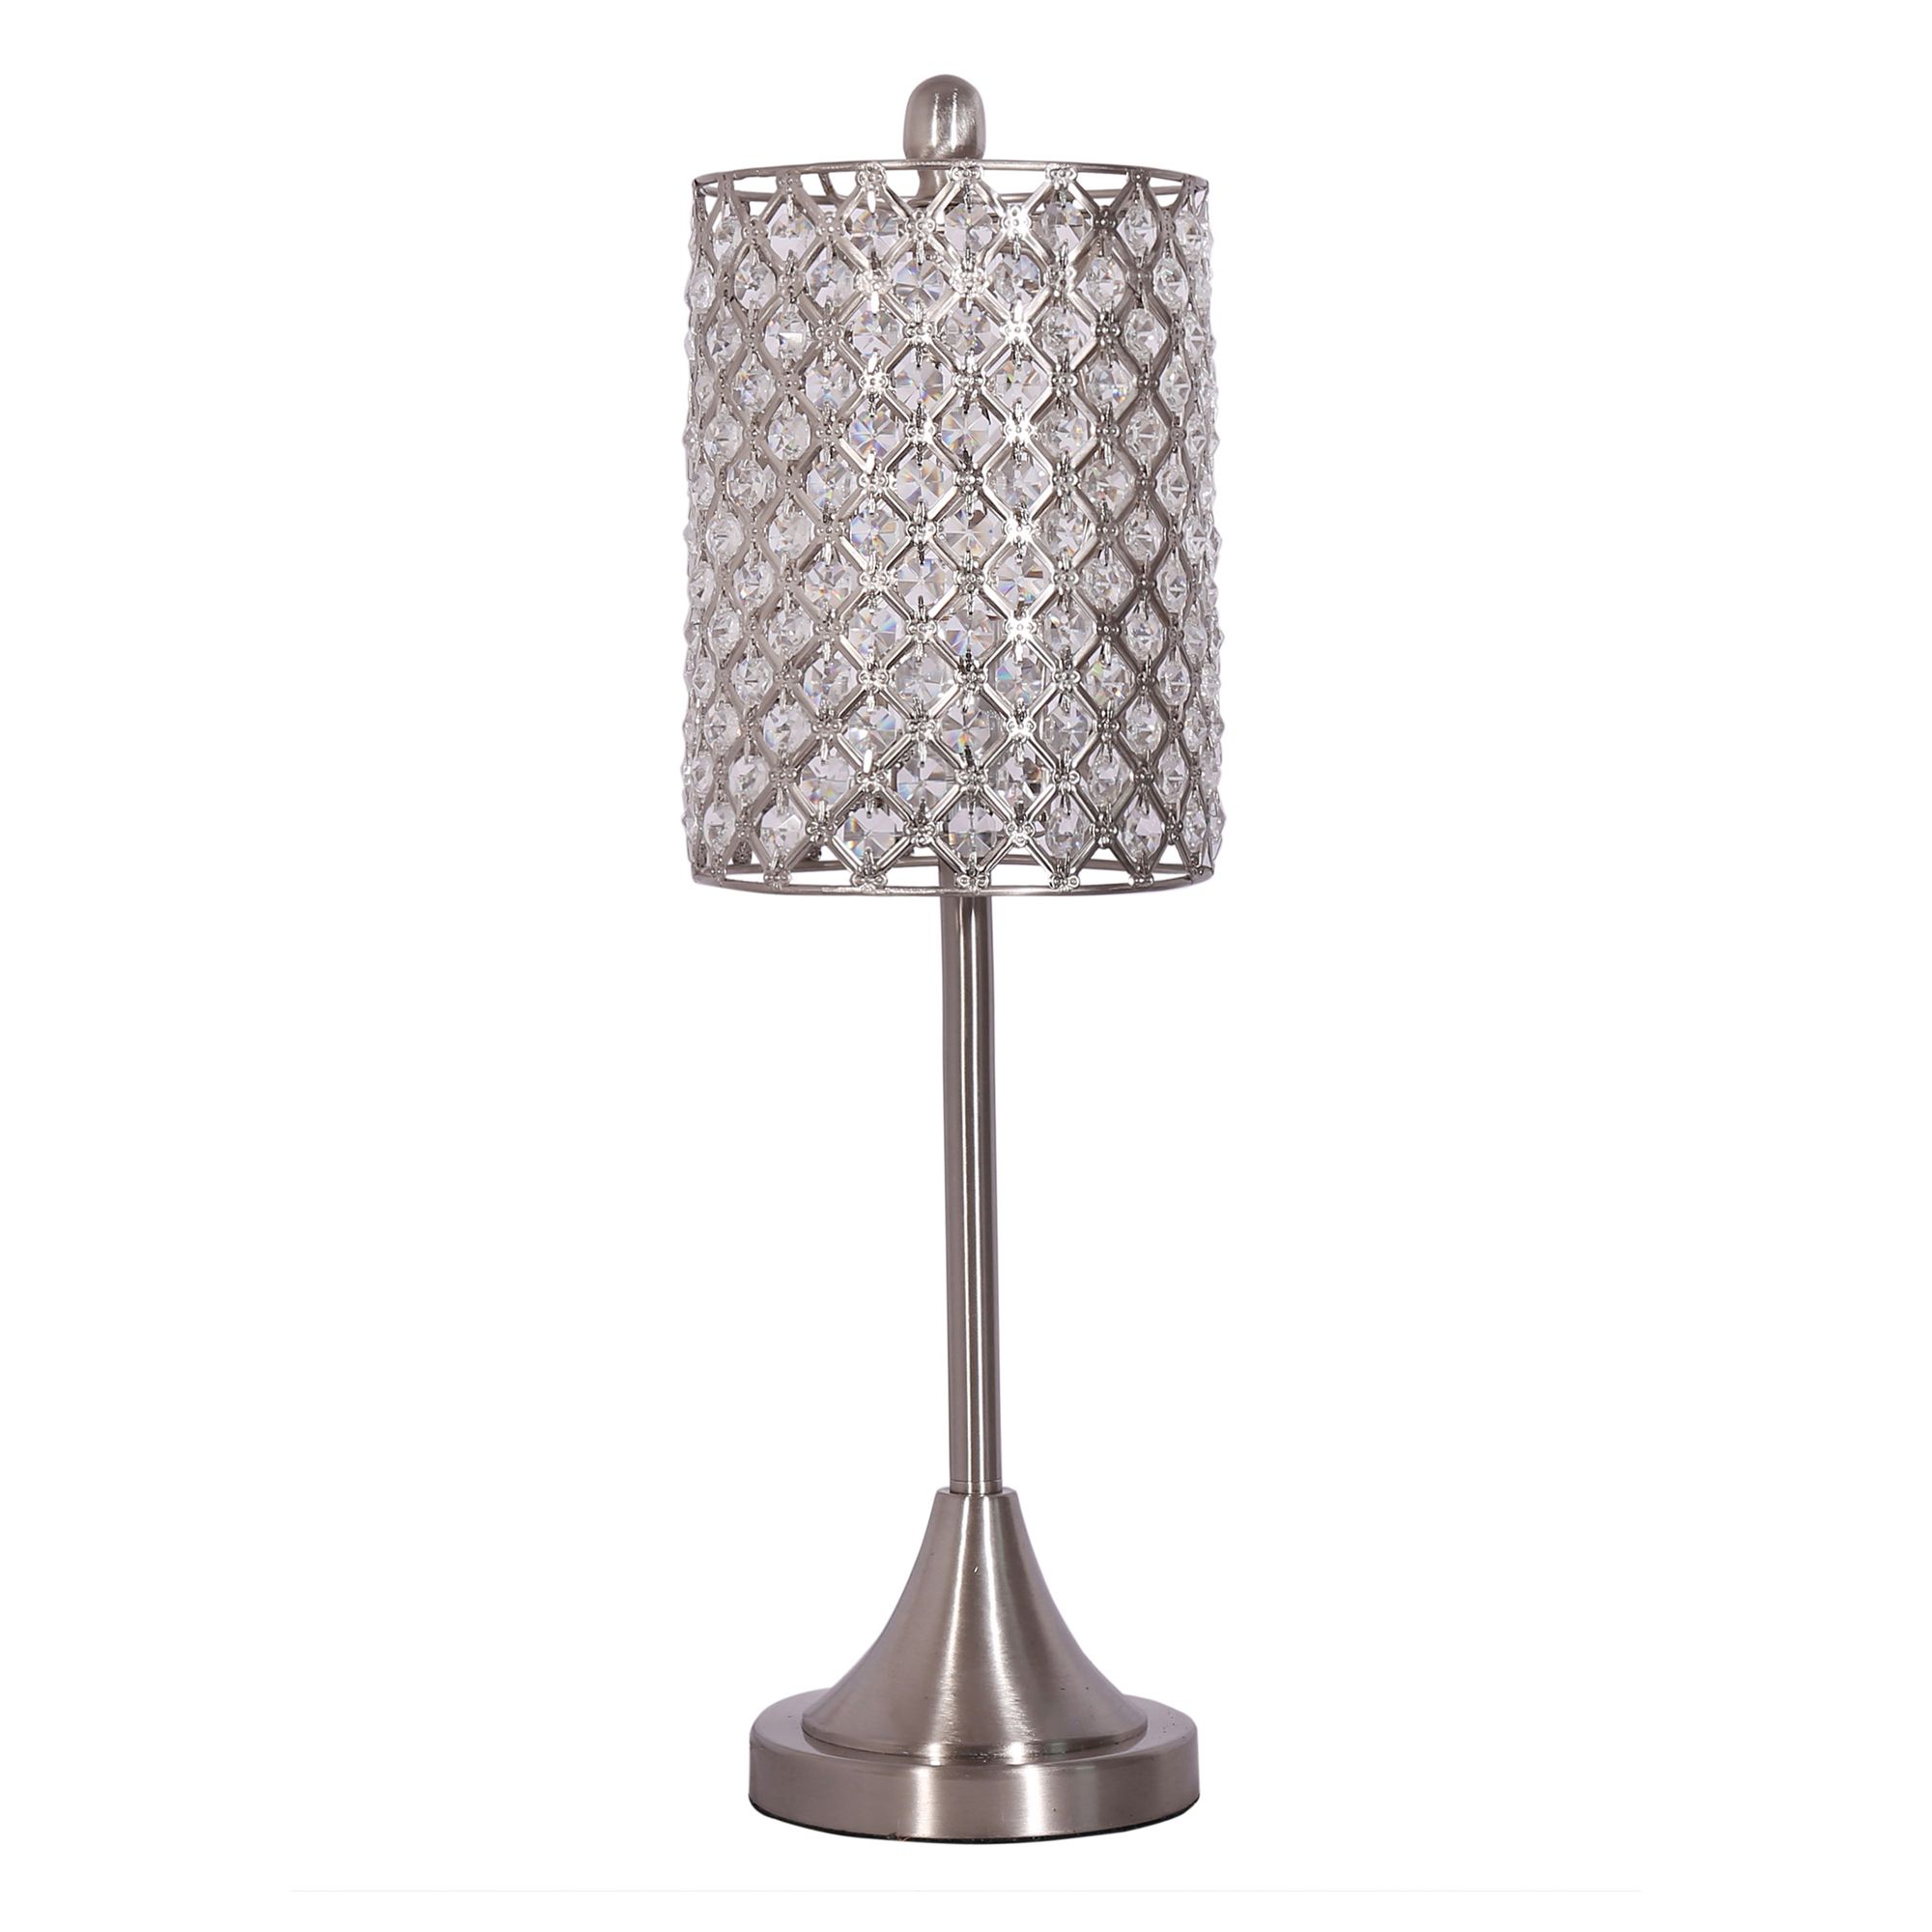 Set of 2 Metal Table Lamp w Crystal Bead Shade